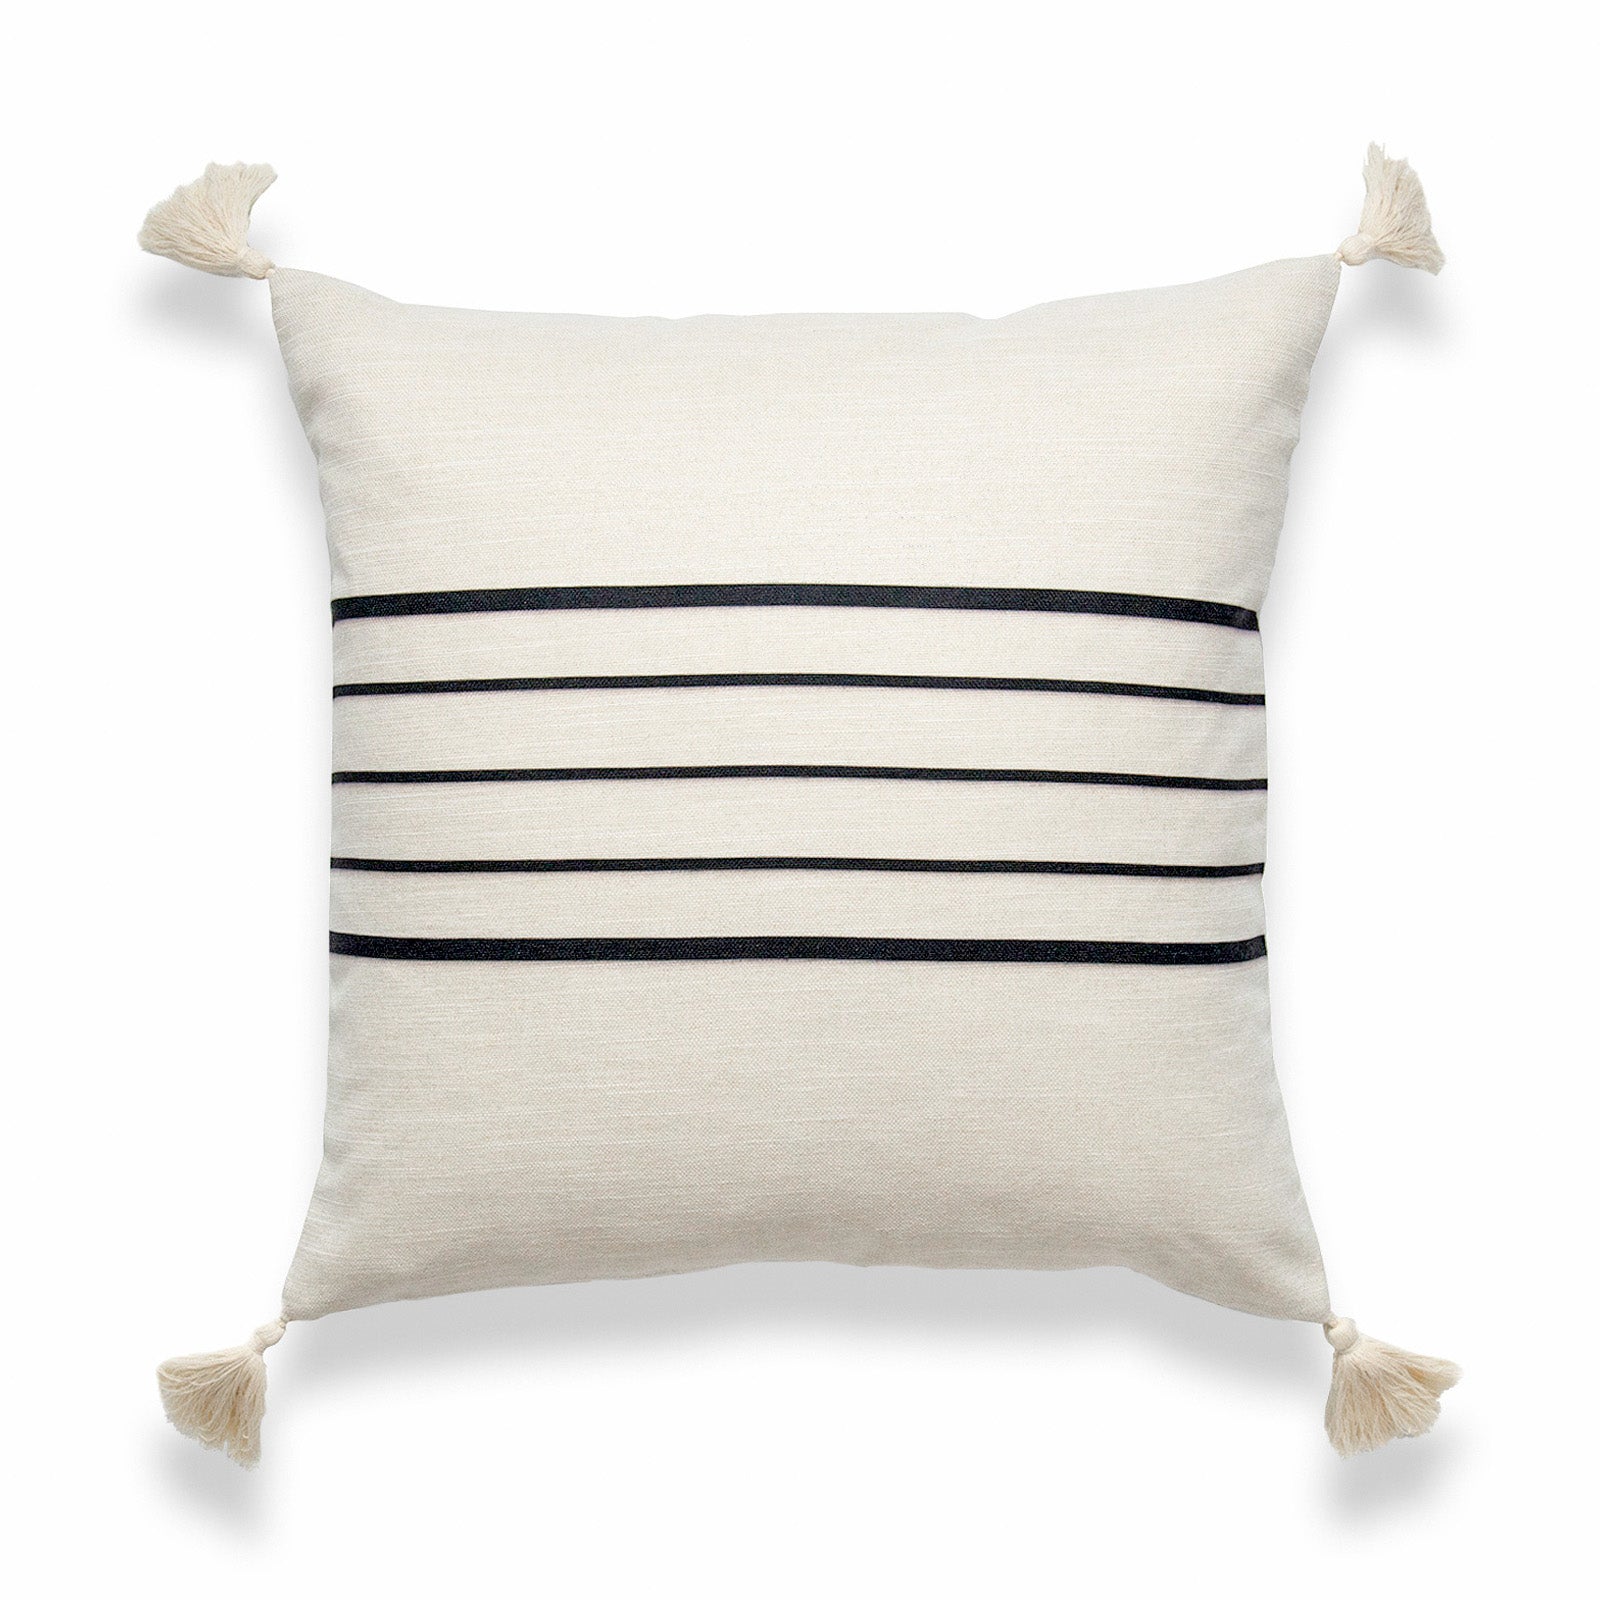 Moroccan Tassel Neutral Pillow Cover, Geo Stripes, Beige Balck, 18"x18"